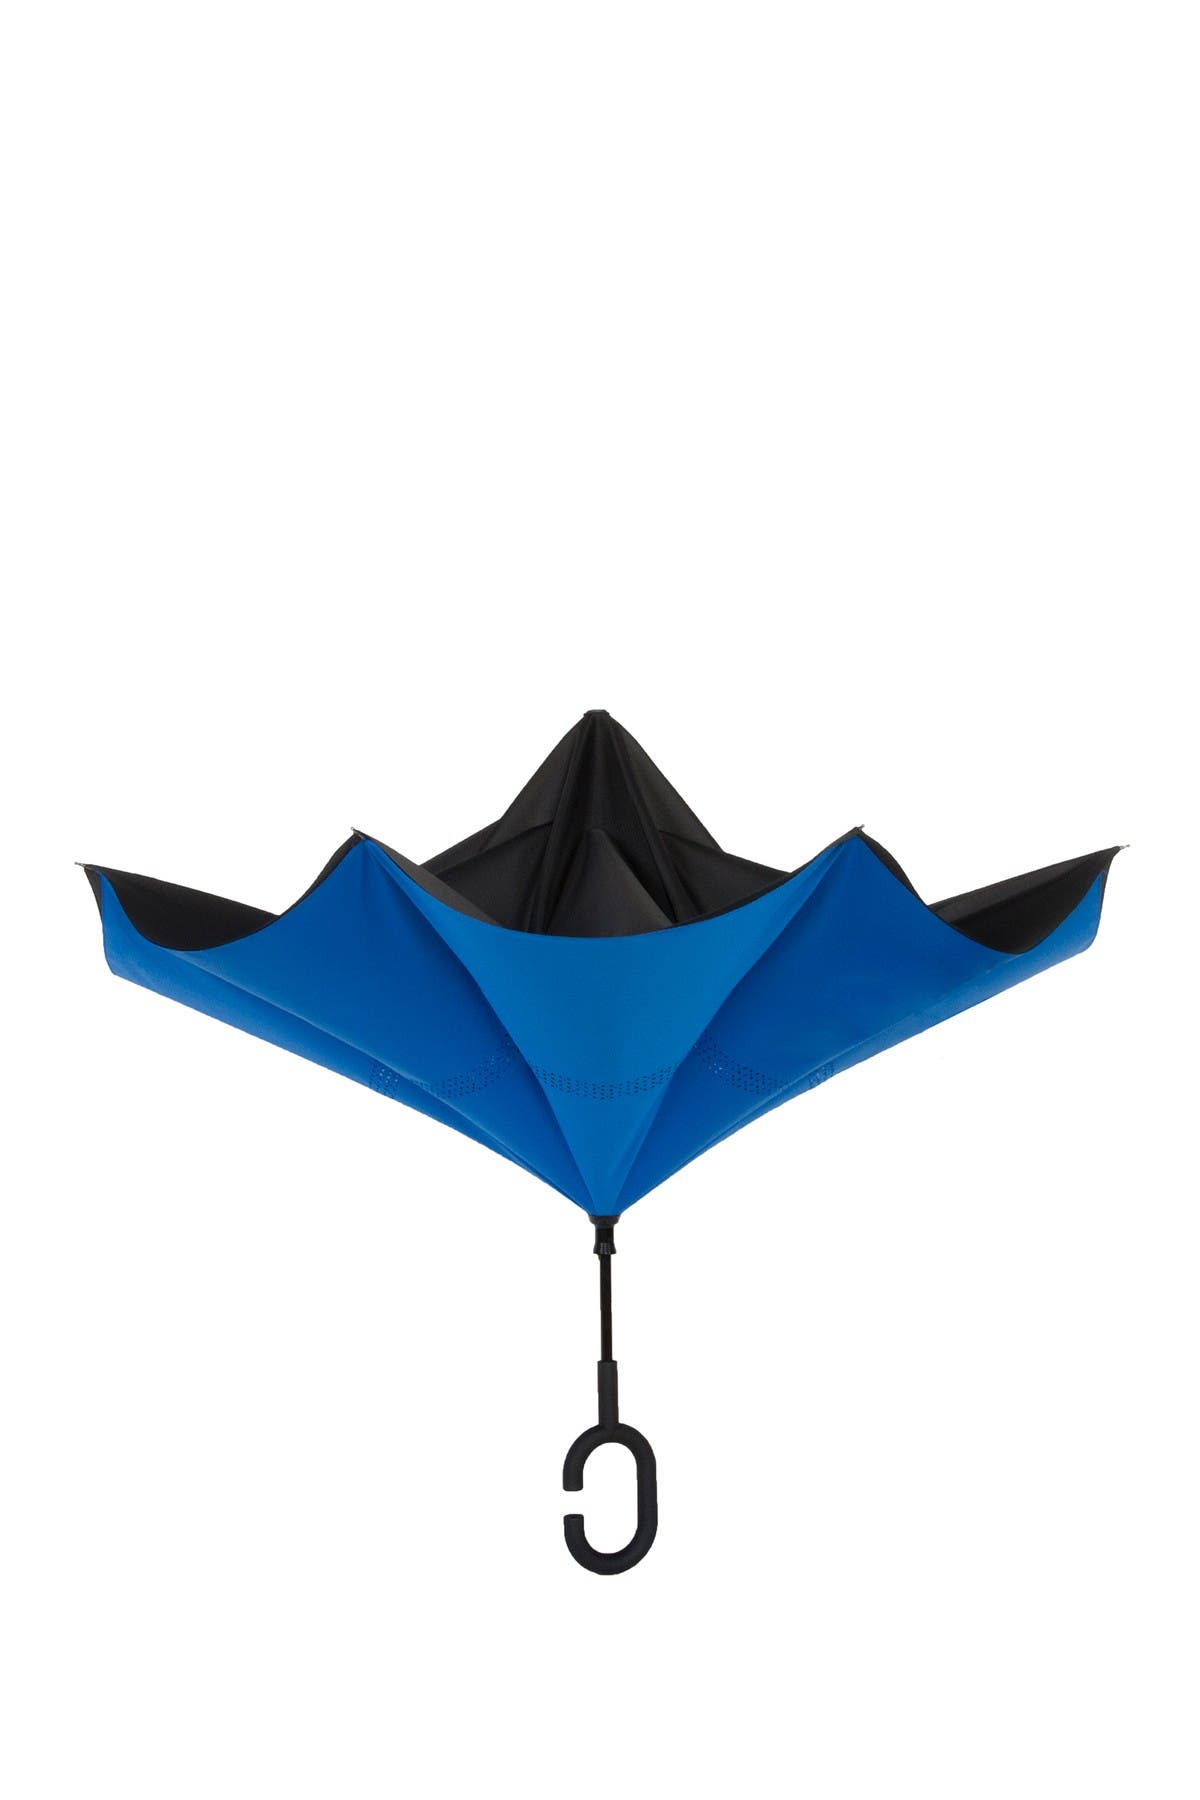 Shedrain Unbelievabrella Reversible Umbrella In Open Blue4